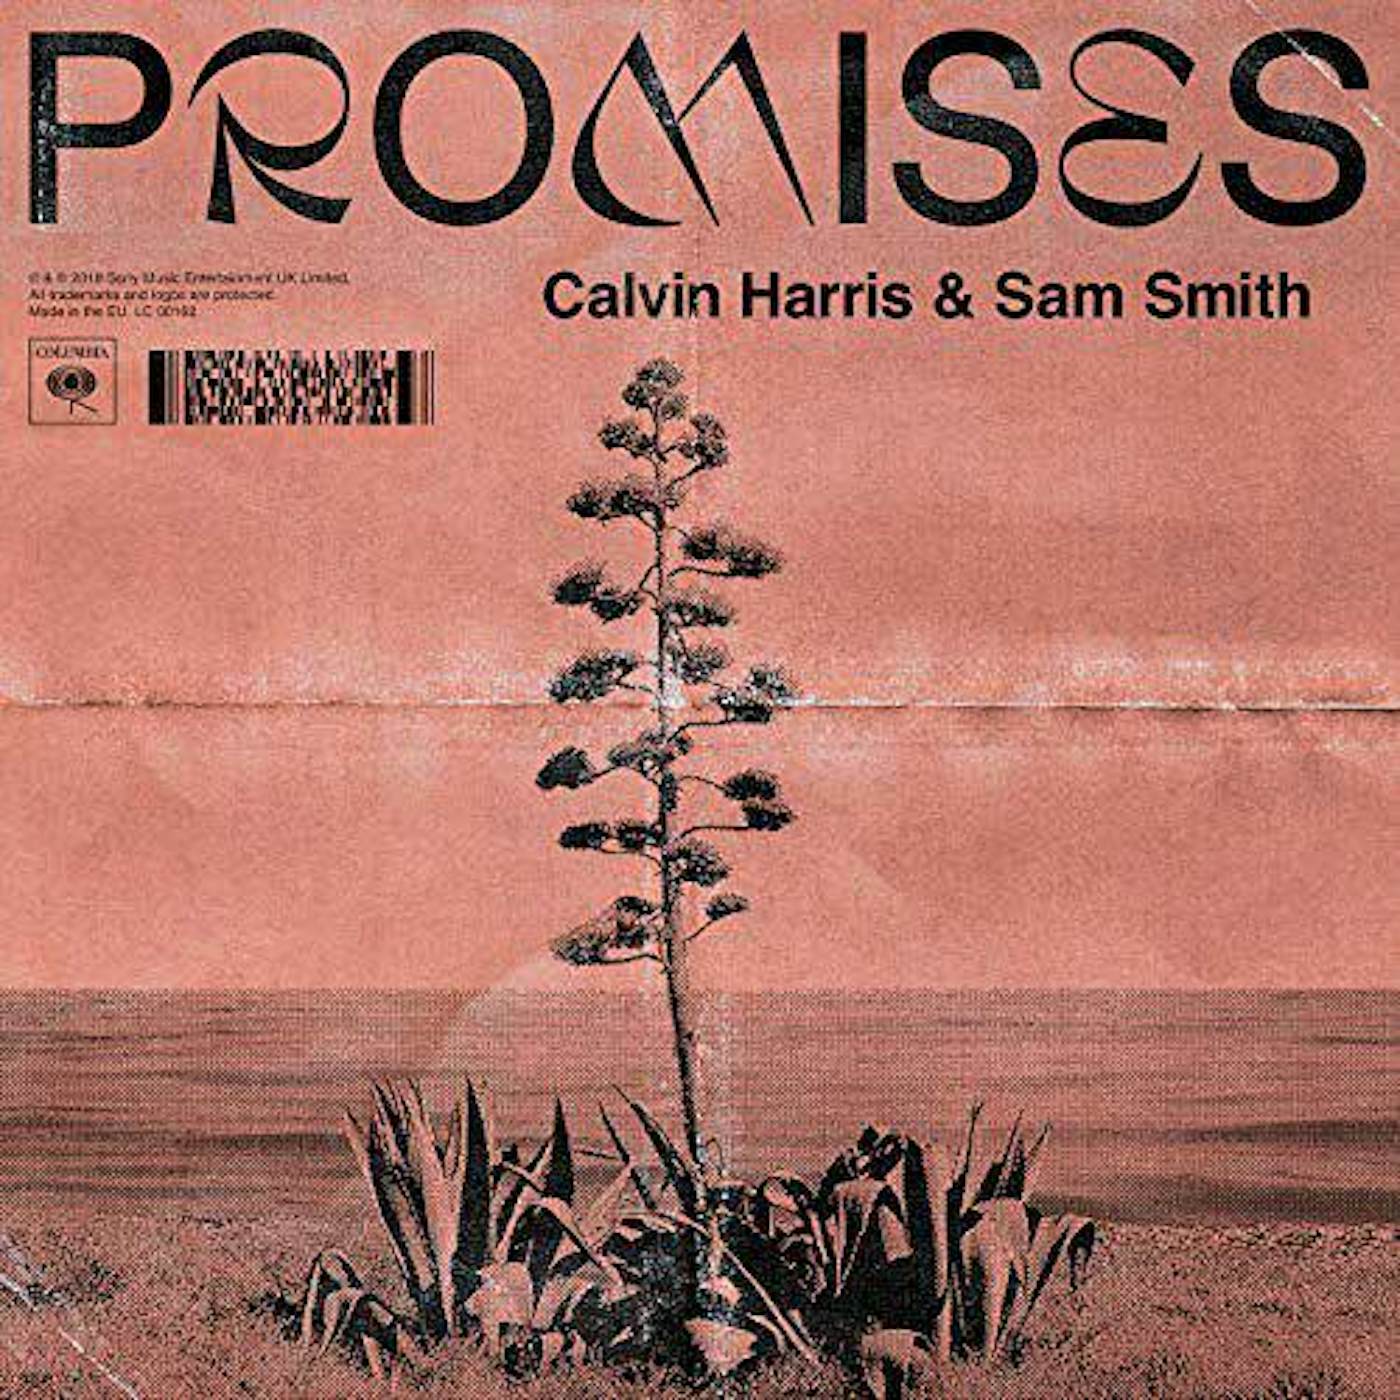 Calvin Harris PROMISES Vinyl Record